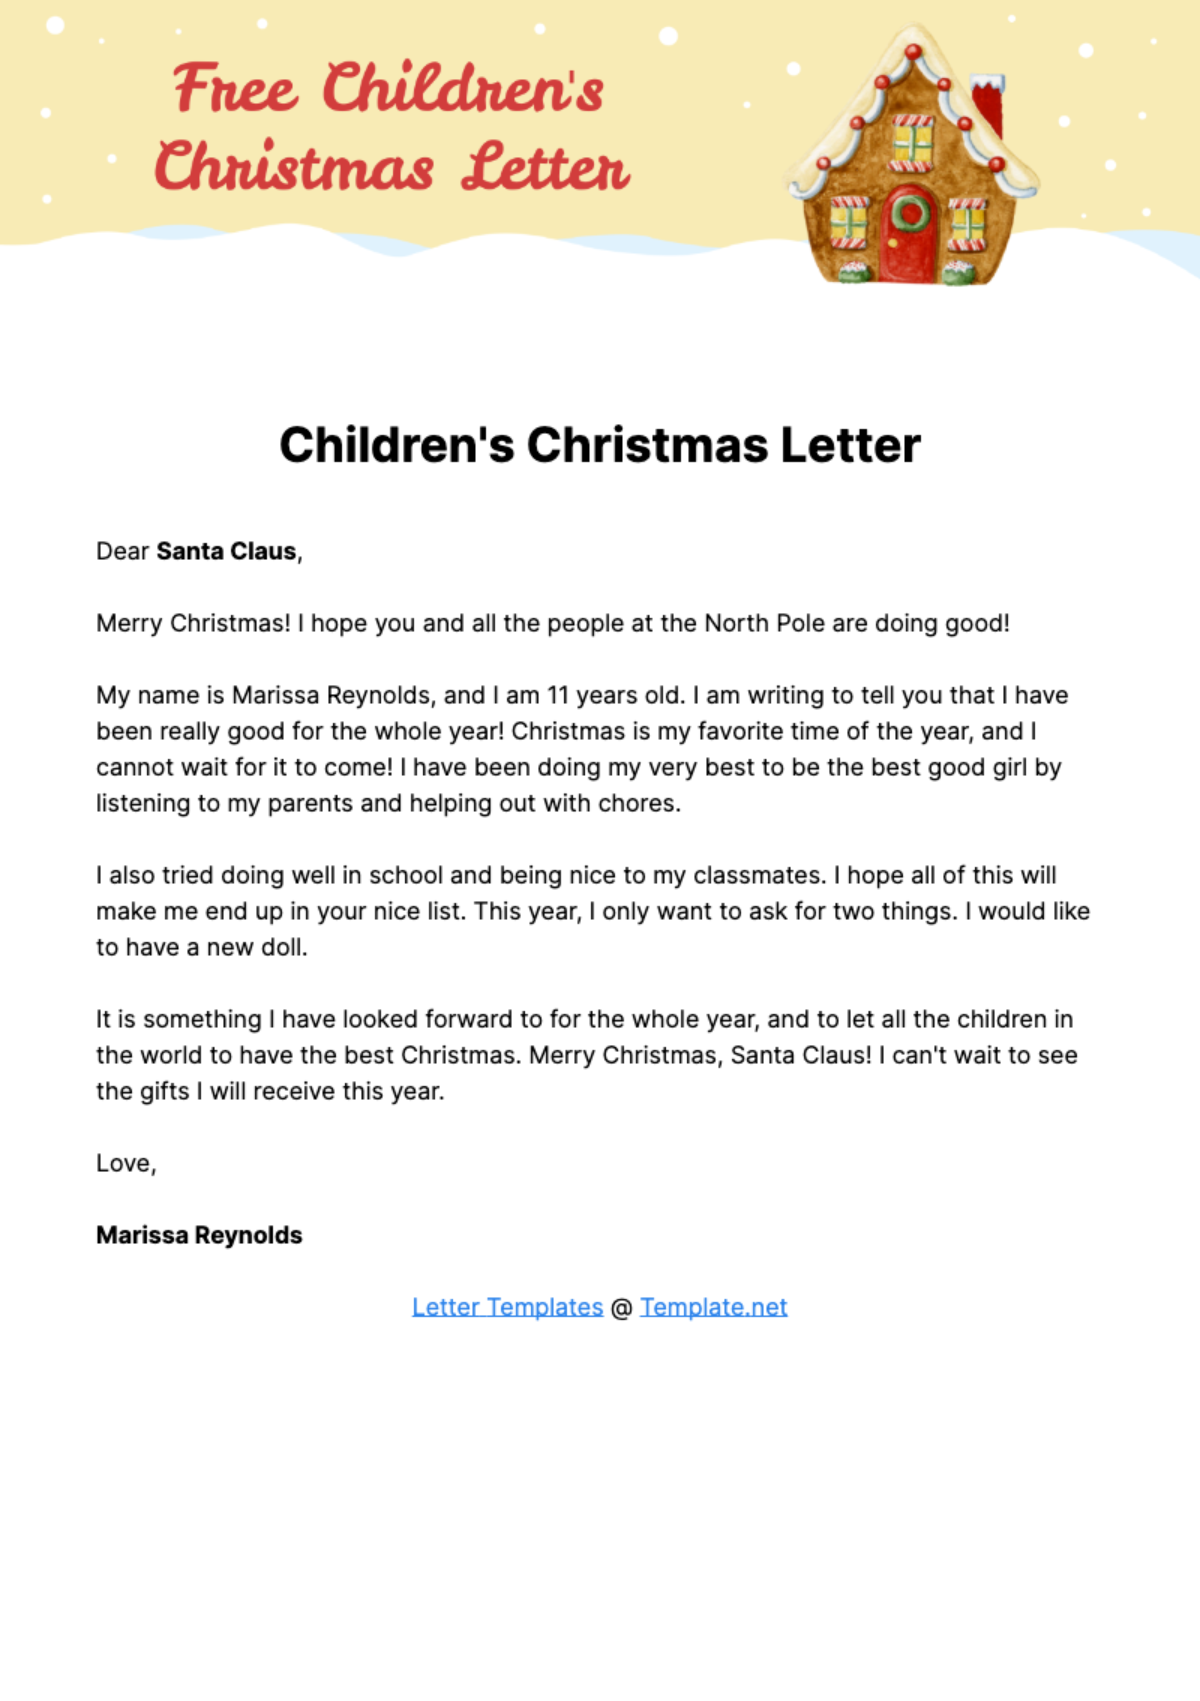 Free Children's Christmas Letter Template